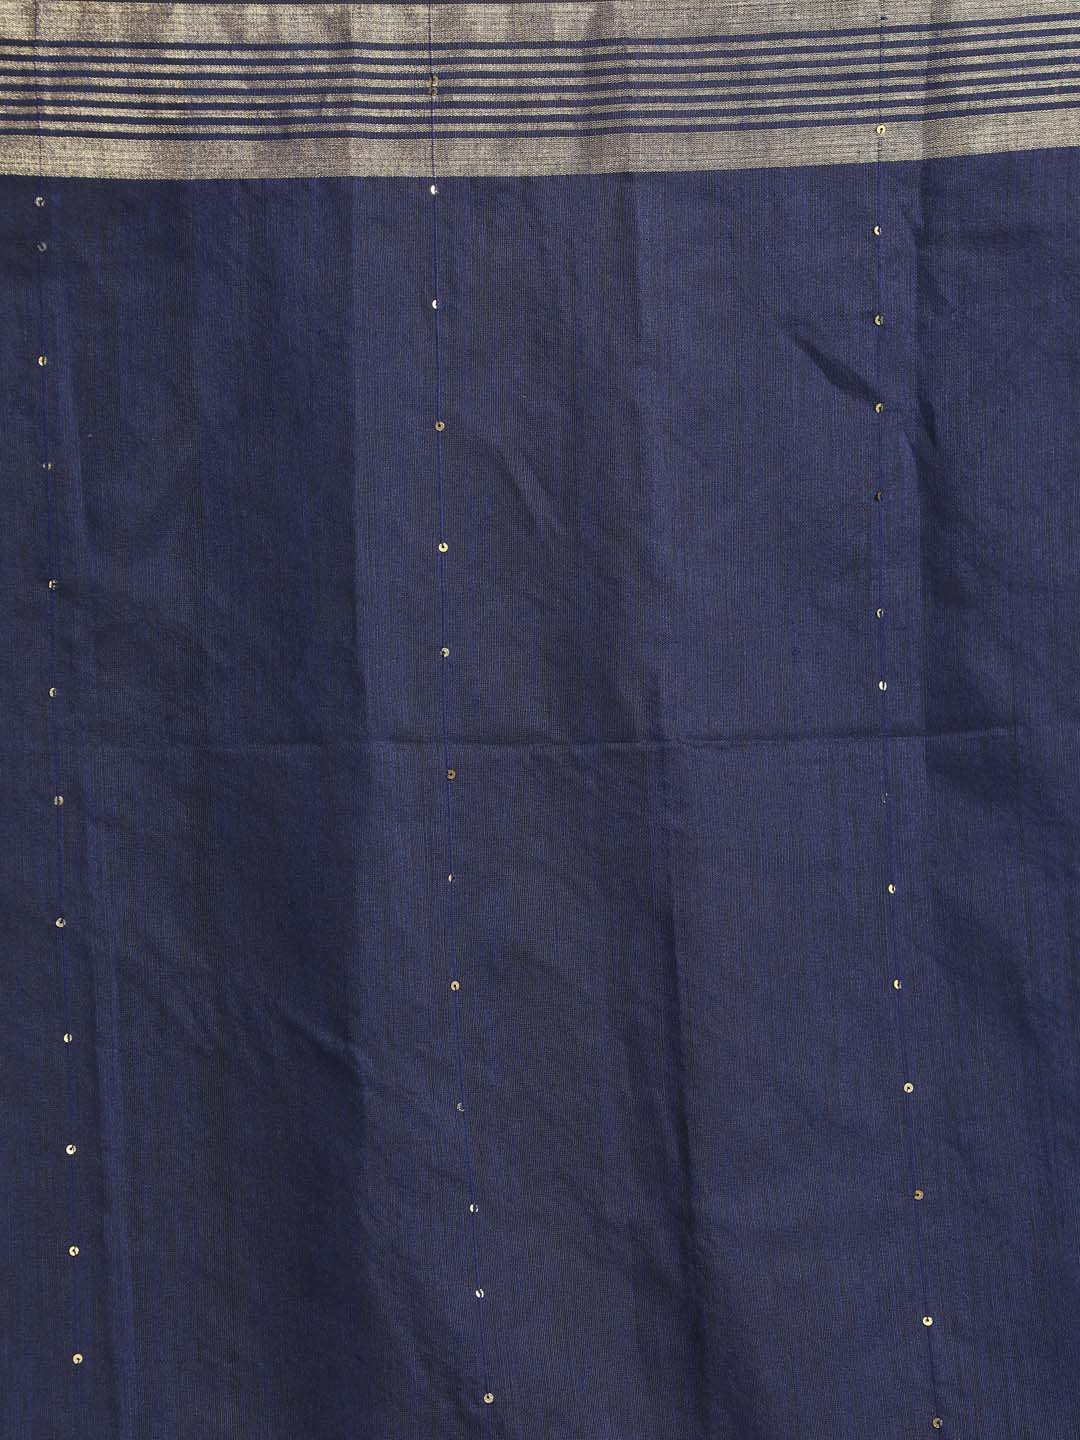 Indethnic Navy Blue Bengal Handloom Cotton Blend Party Saree - Saree Detail View